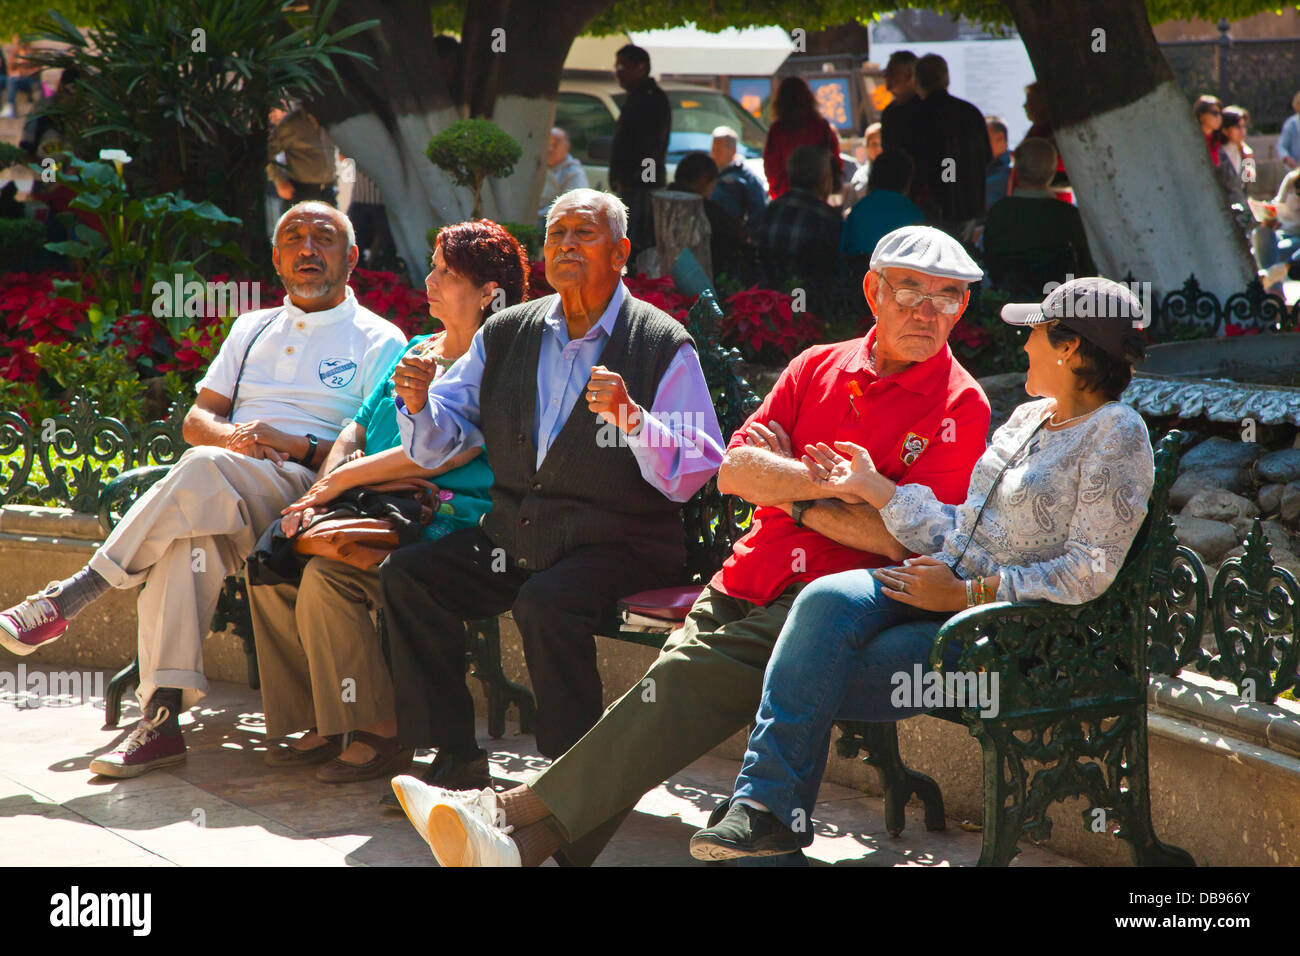 MEXICAN CITIZENS enjoy sitting in the central square - GUANAJUATO, MEXICO Stock Photo